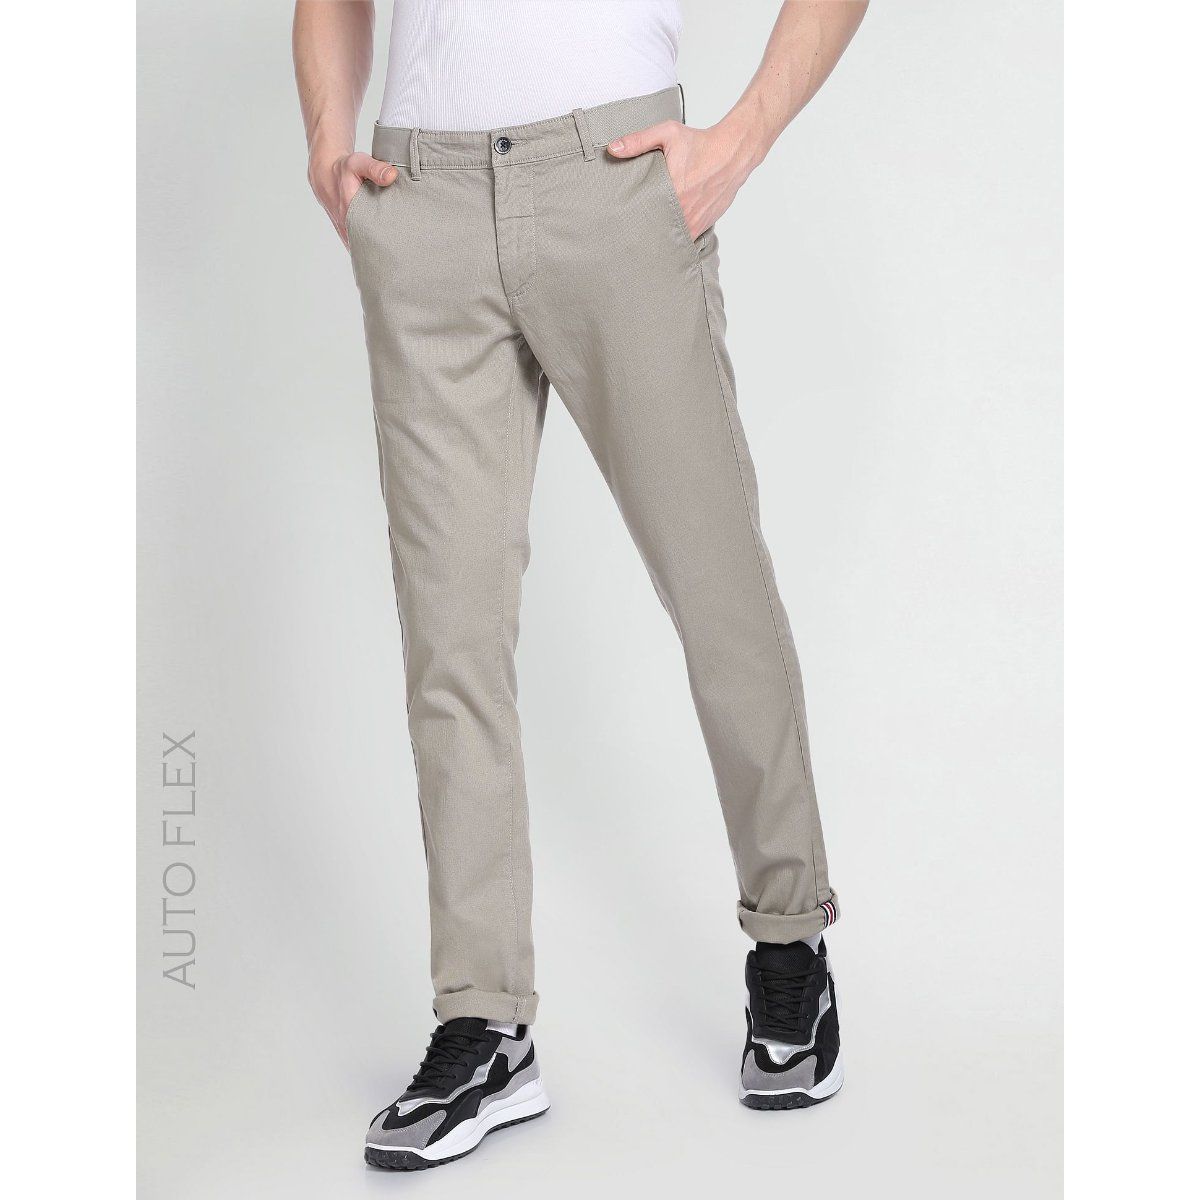 Buy Arrow Khaki Brown Tapered Fit Autoflex Formal Trousers on Myntra |  PaisaWapas.com